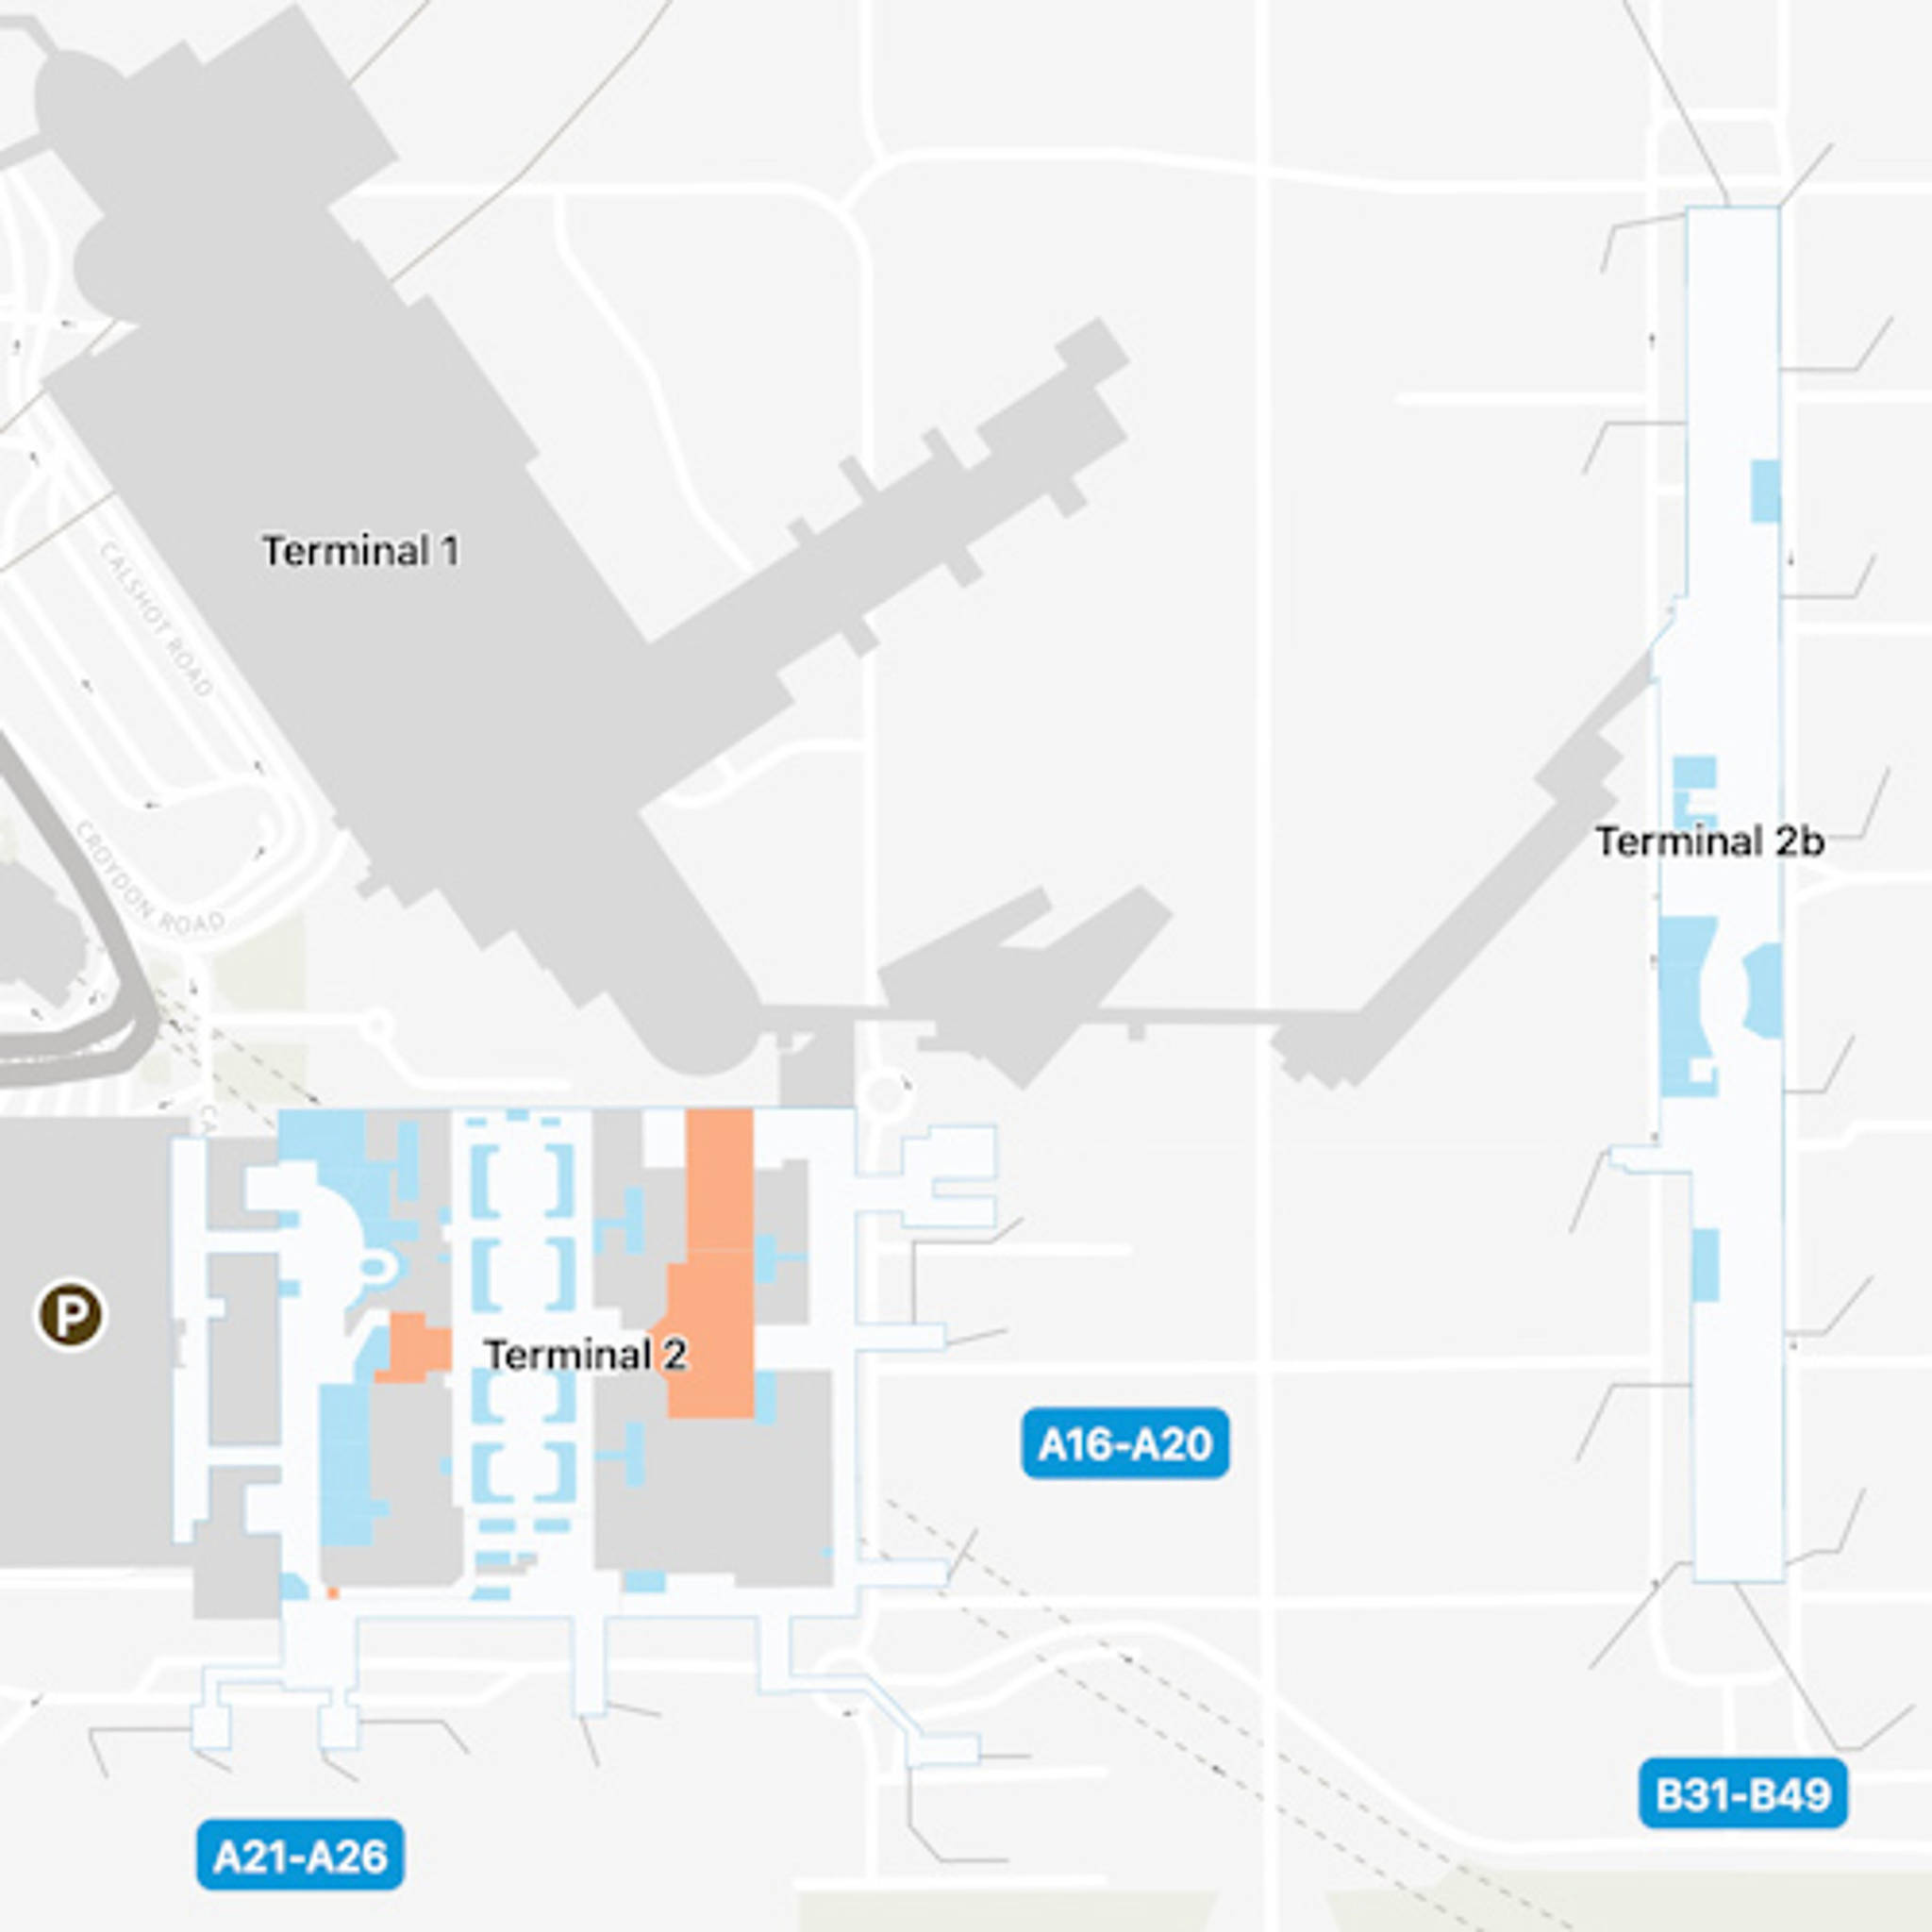 London Heathrow Airport LHR Terminal 2 Map